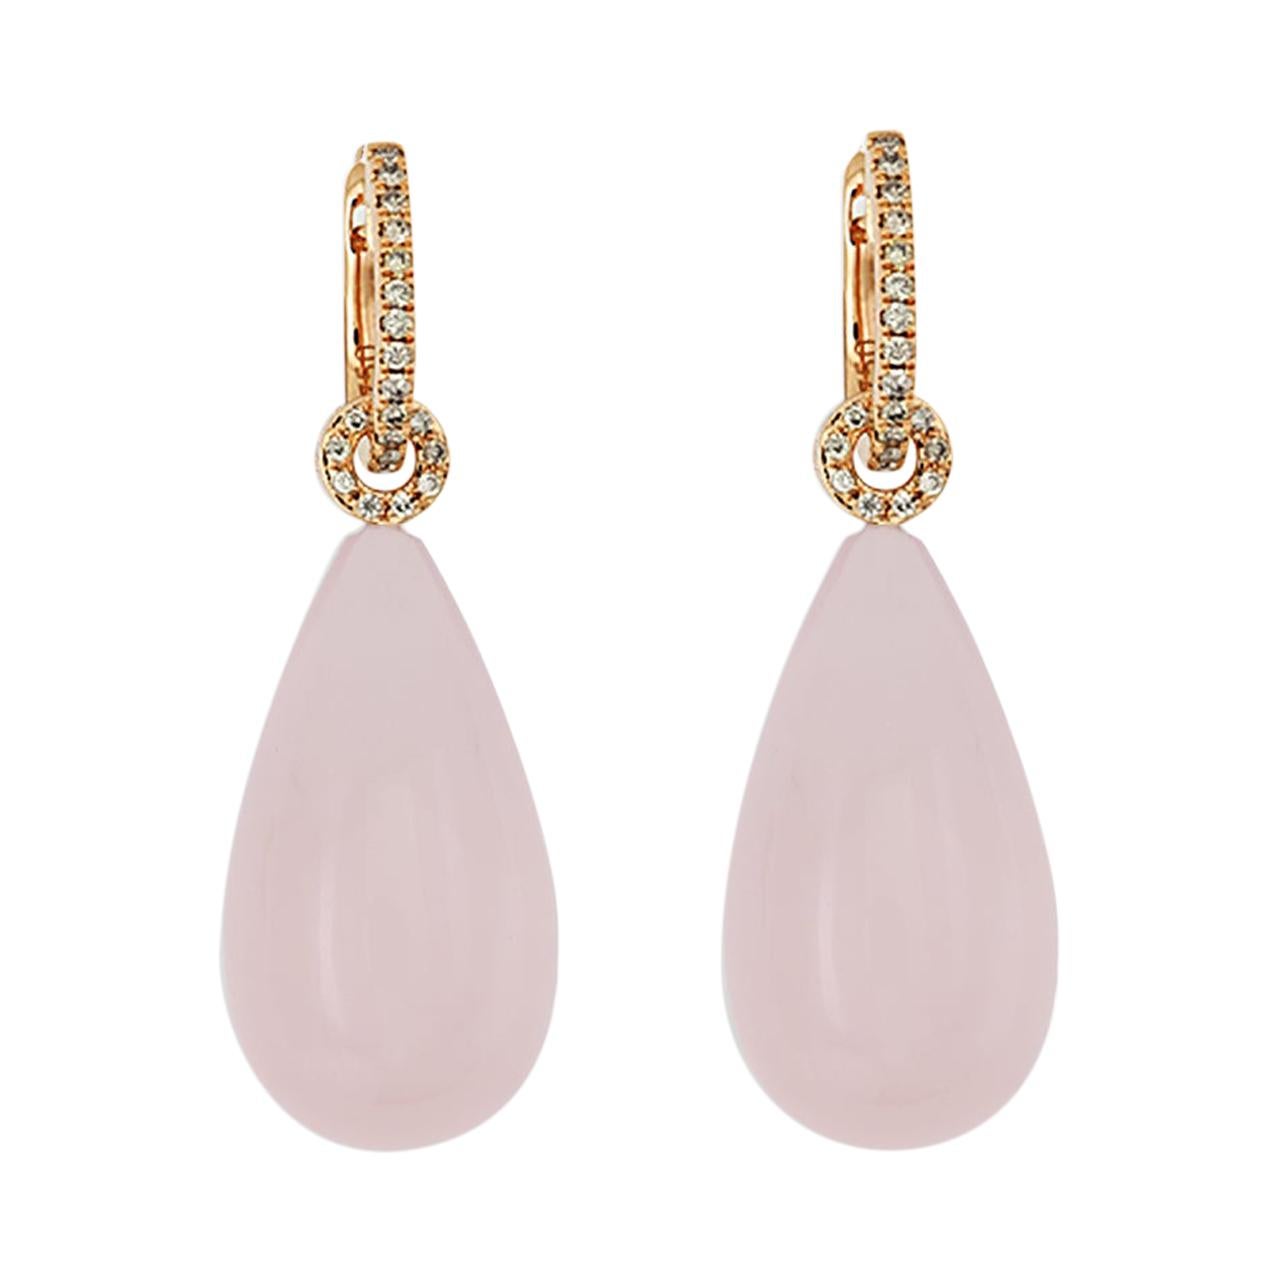 Precious Basics 72 Carat Rose Quartz and Diamonds Studded Earrings